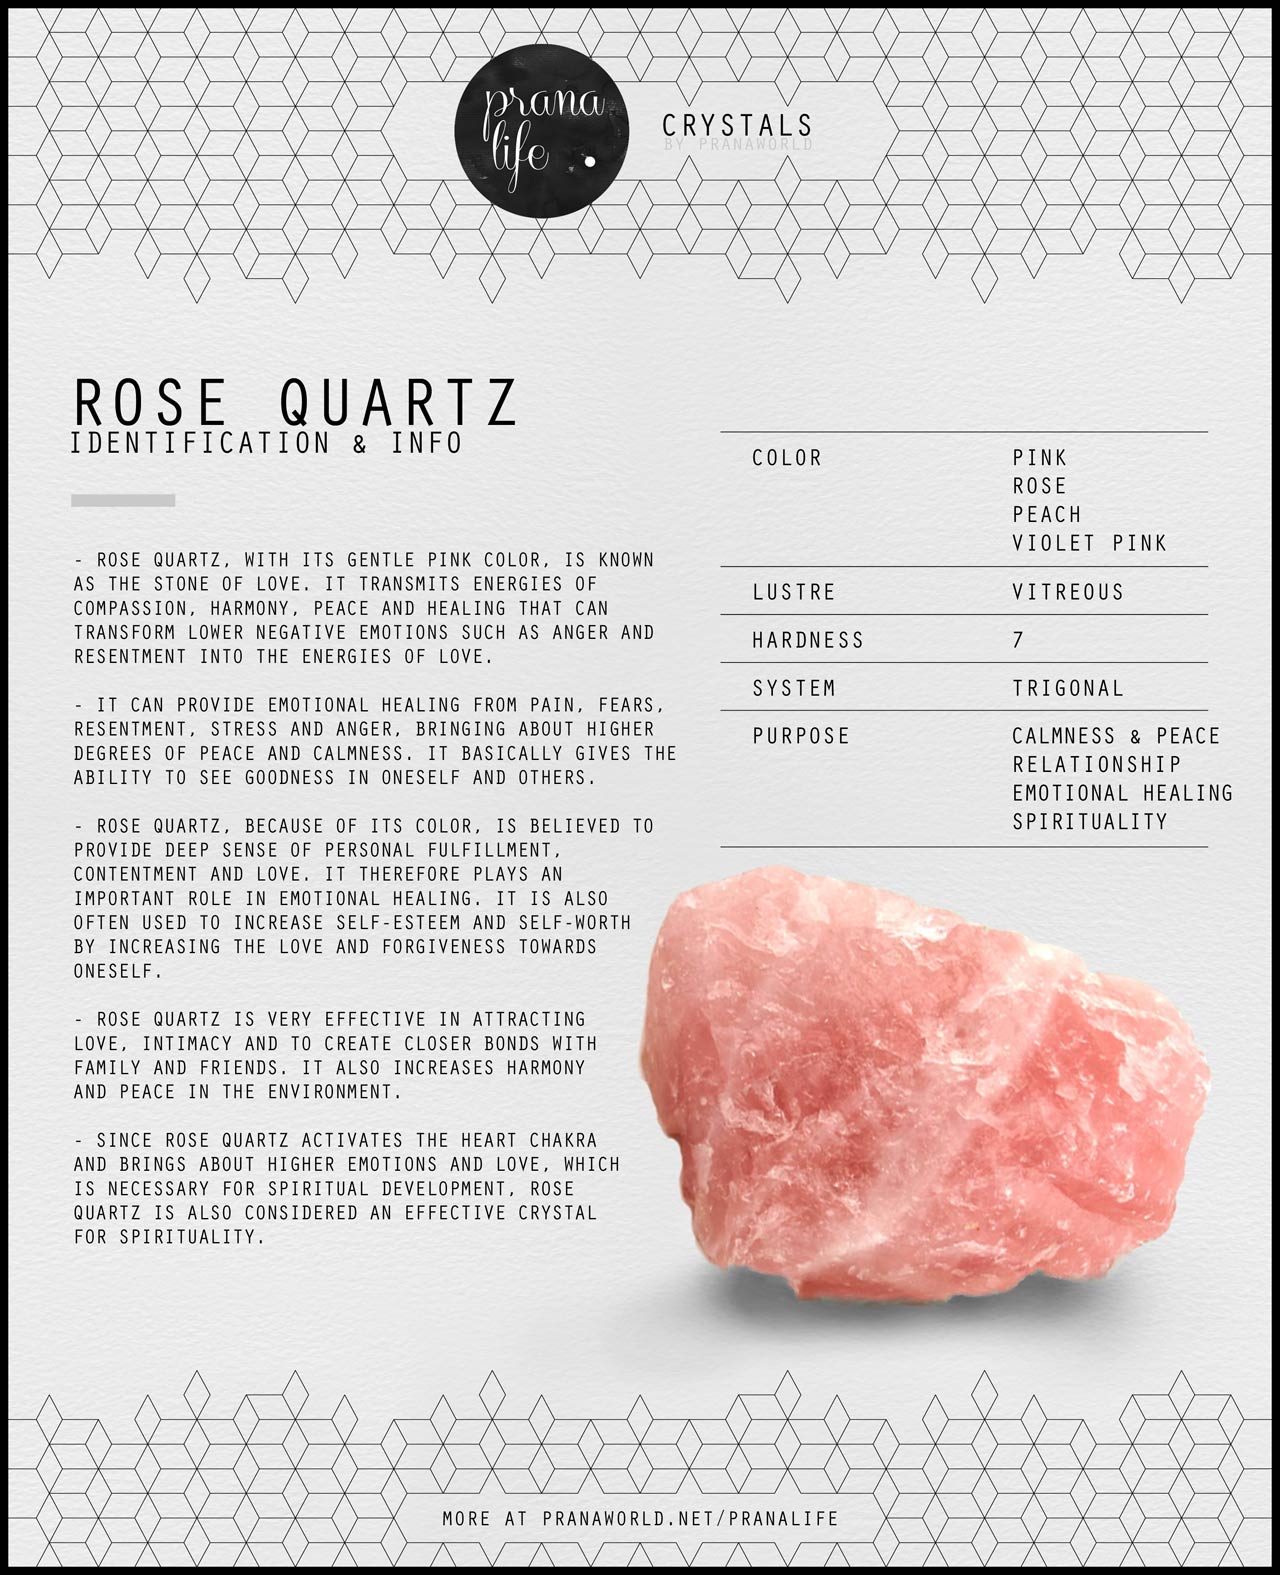 rose quartz benefits of wearing